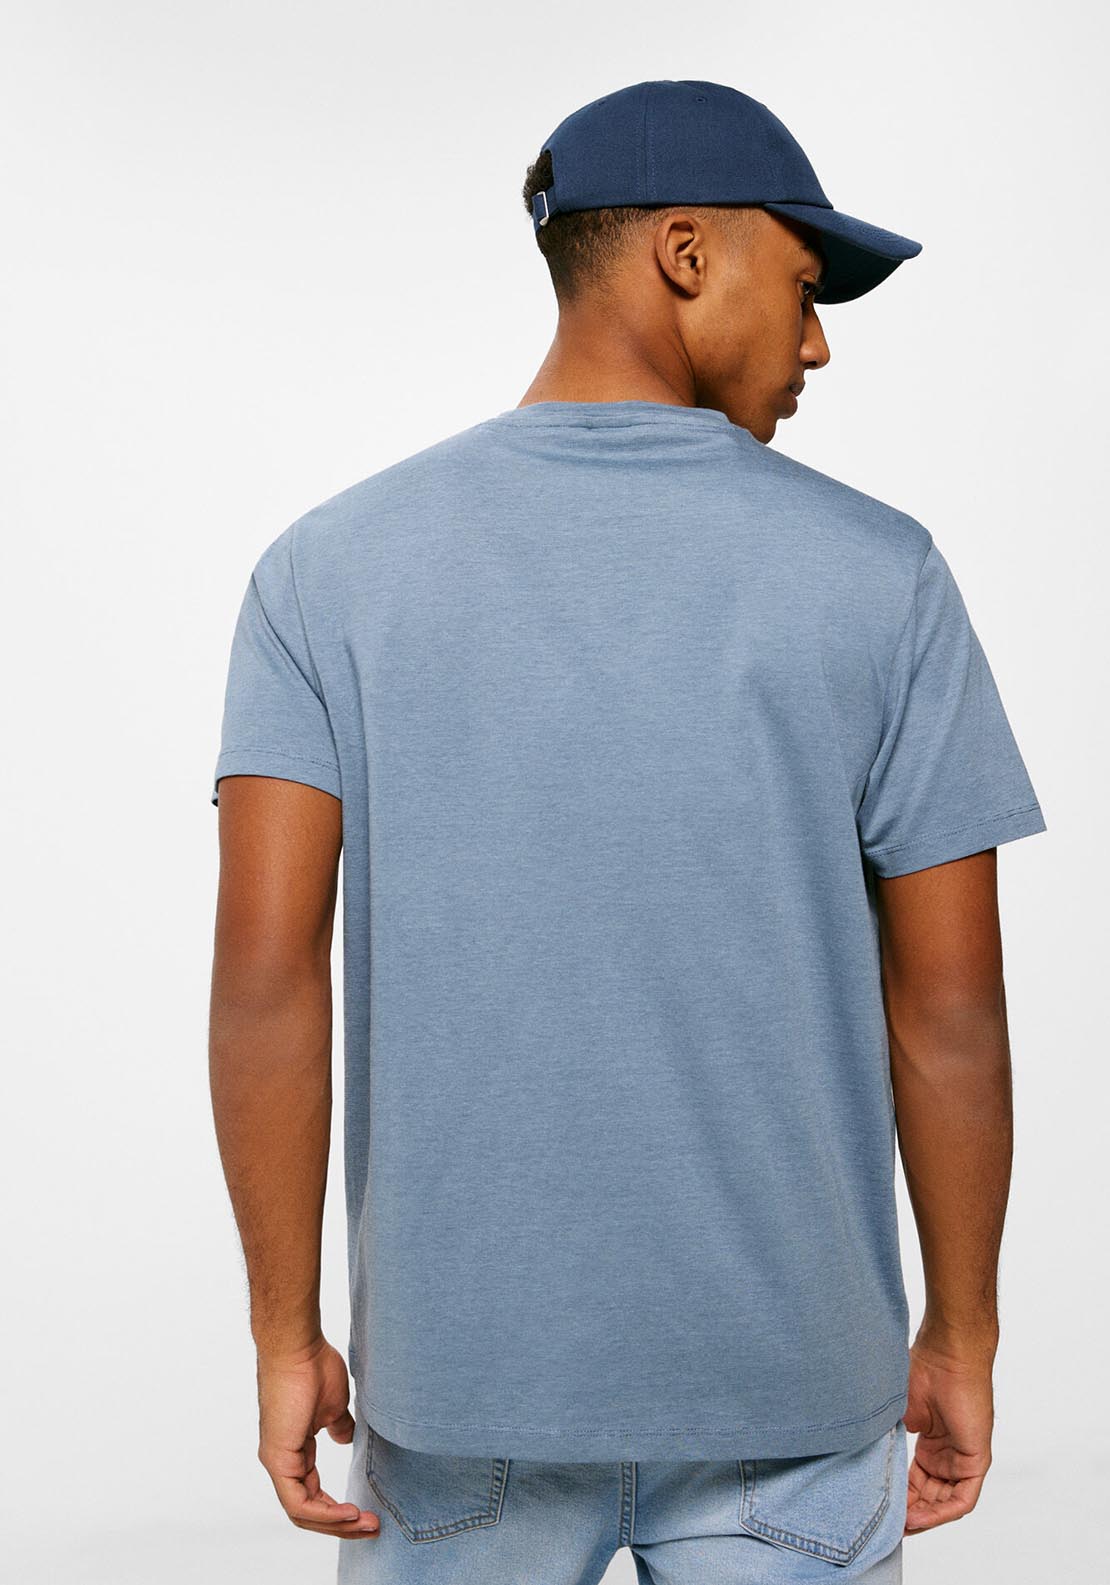 Springfield Short Sleeve Microstripe Tshirt - Blue 3 Shaws Department Stores